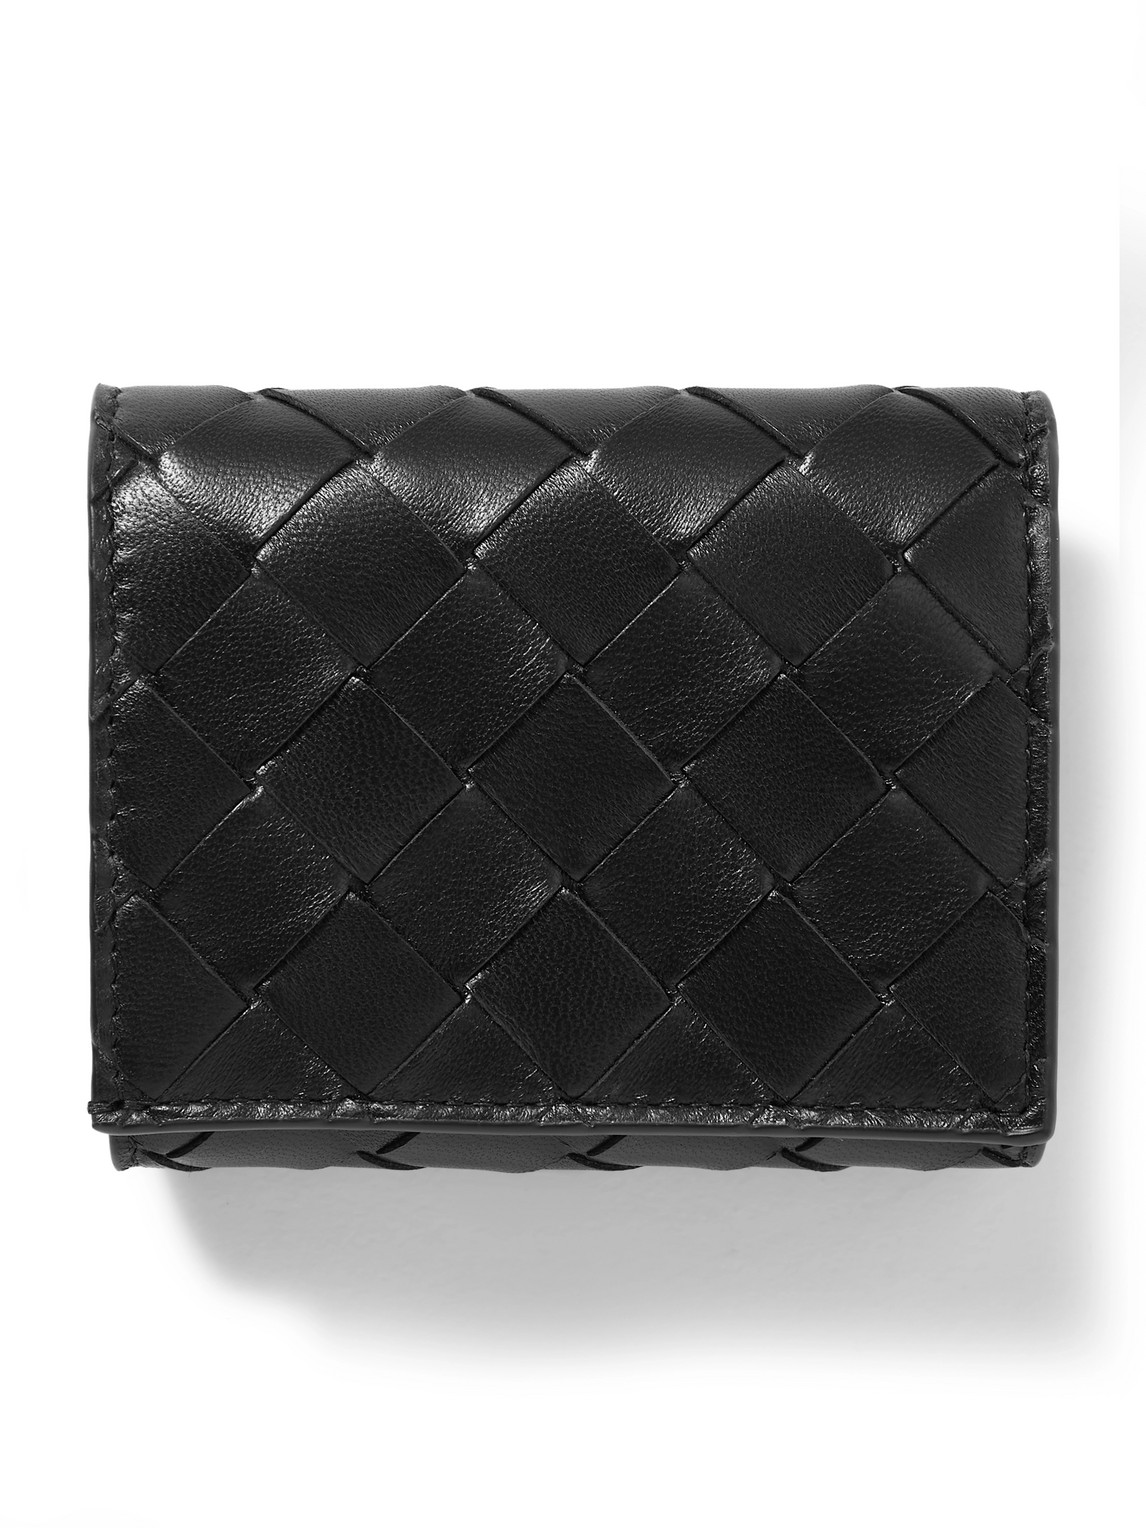 Bottega Veneta Convertible Tri-Fold Intrecciato Leather Wallet